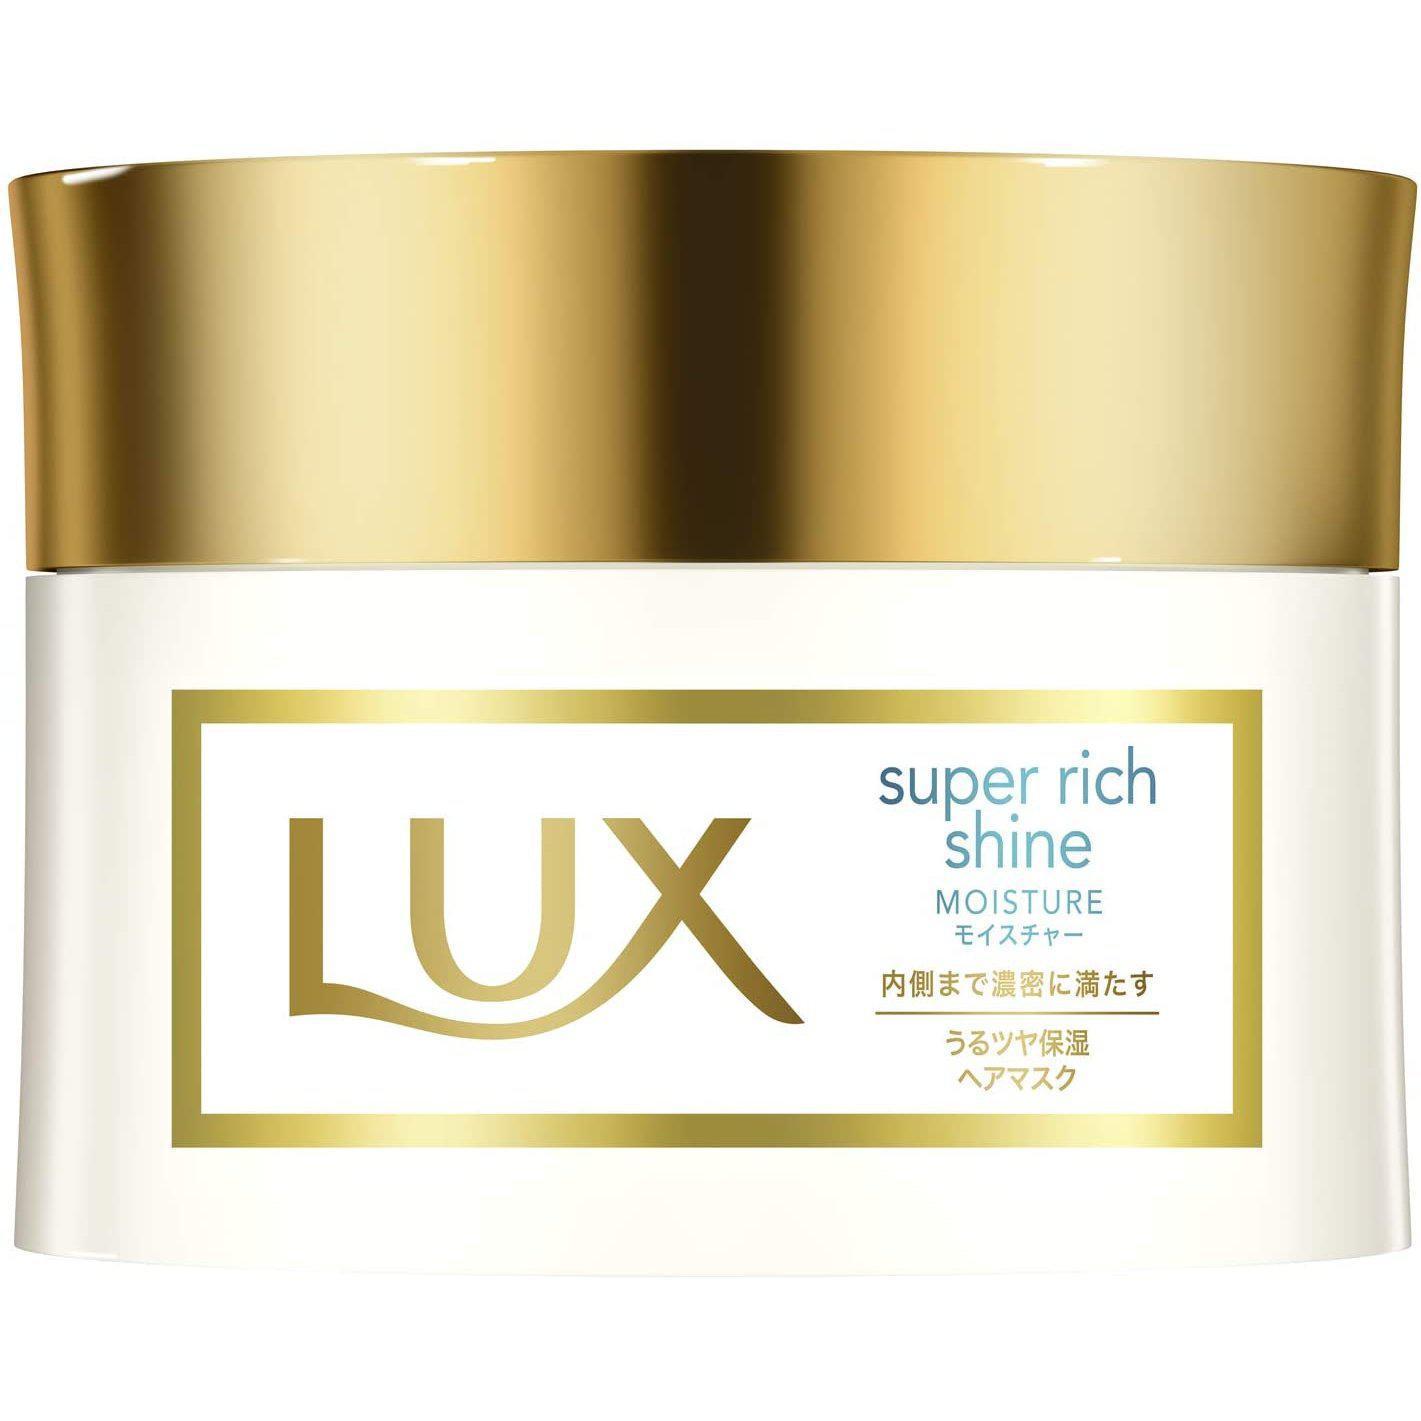 Lux Super Rich Shine Moisture Hair Mask 200g